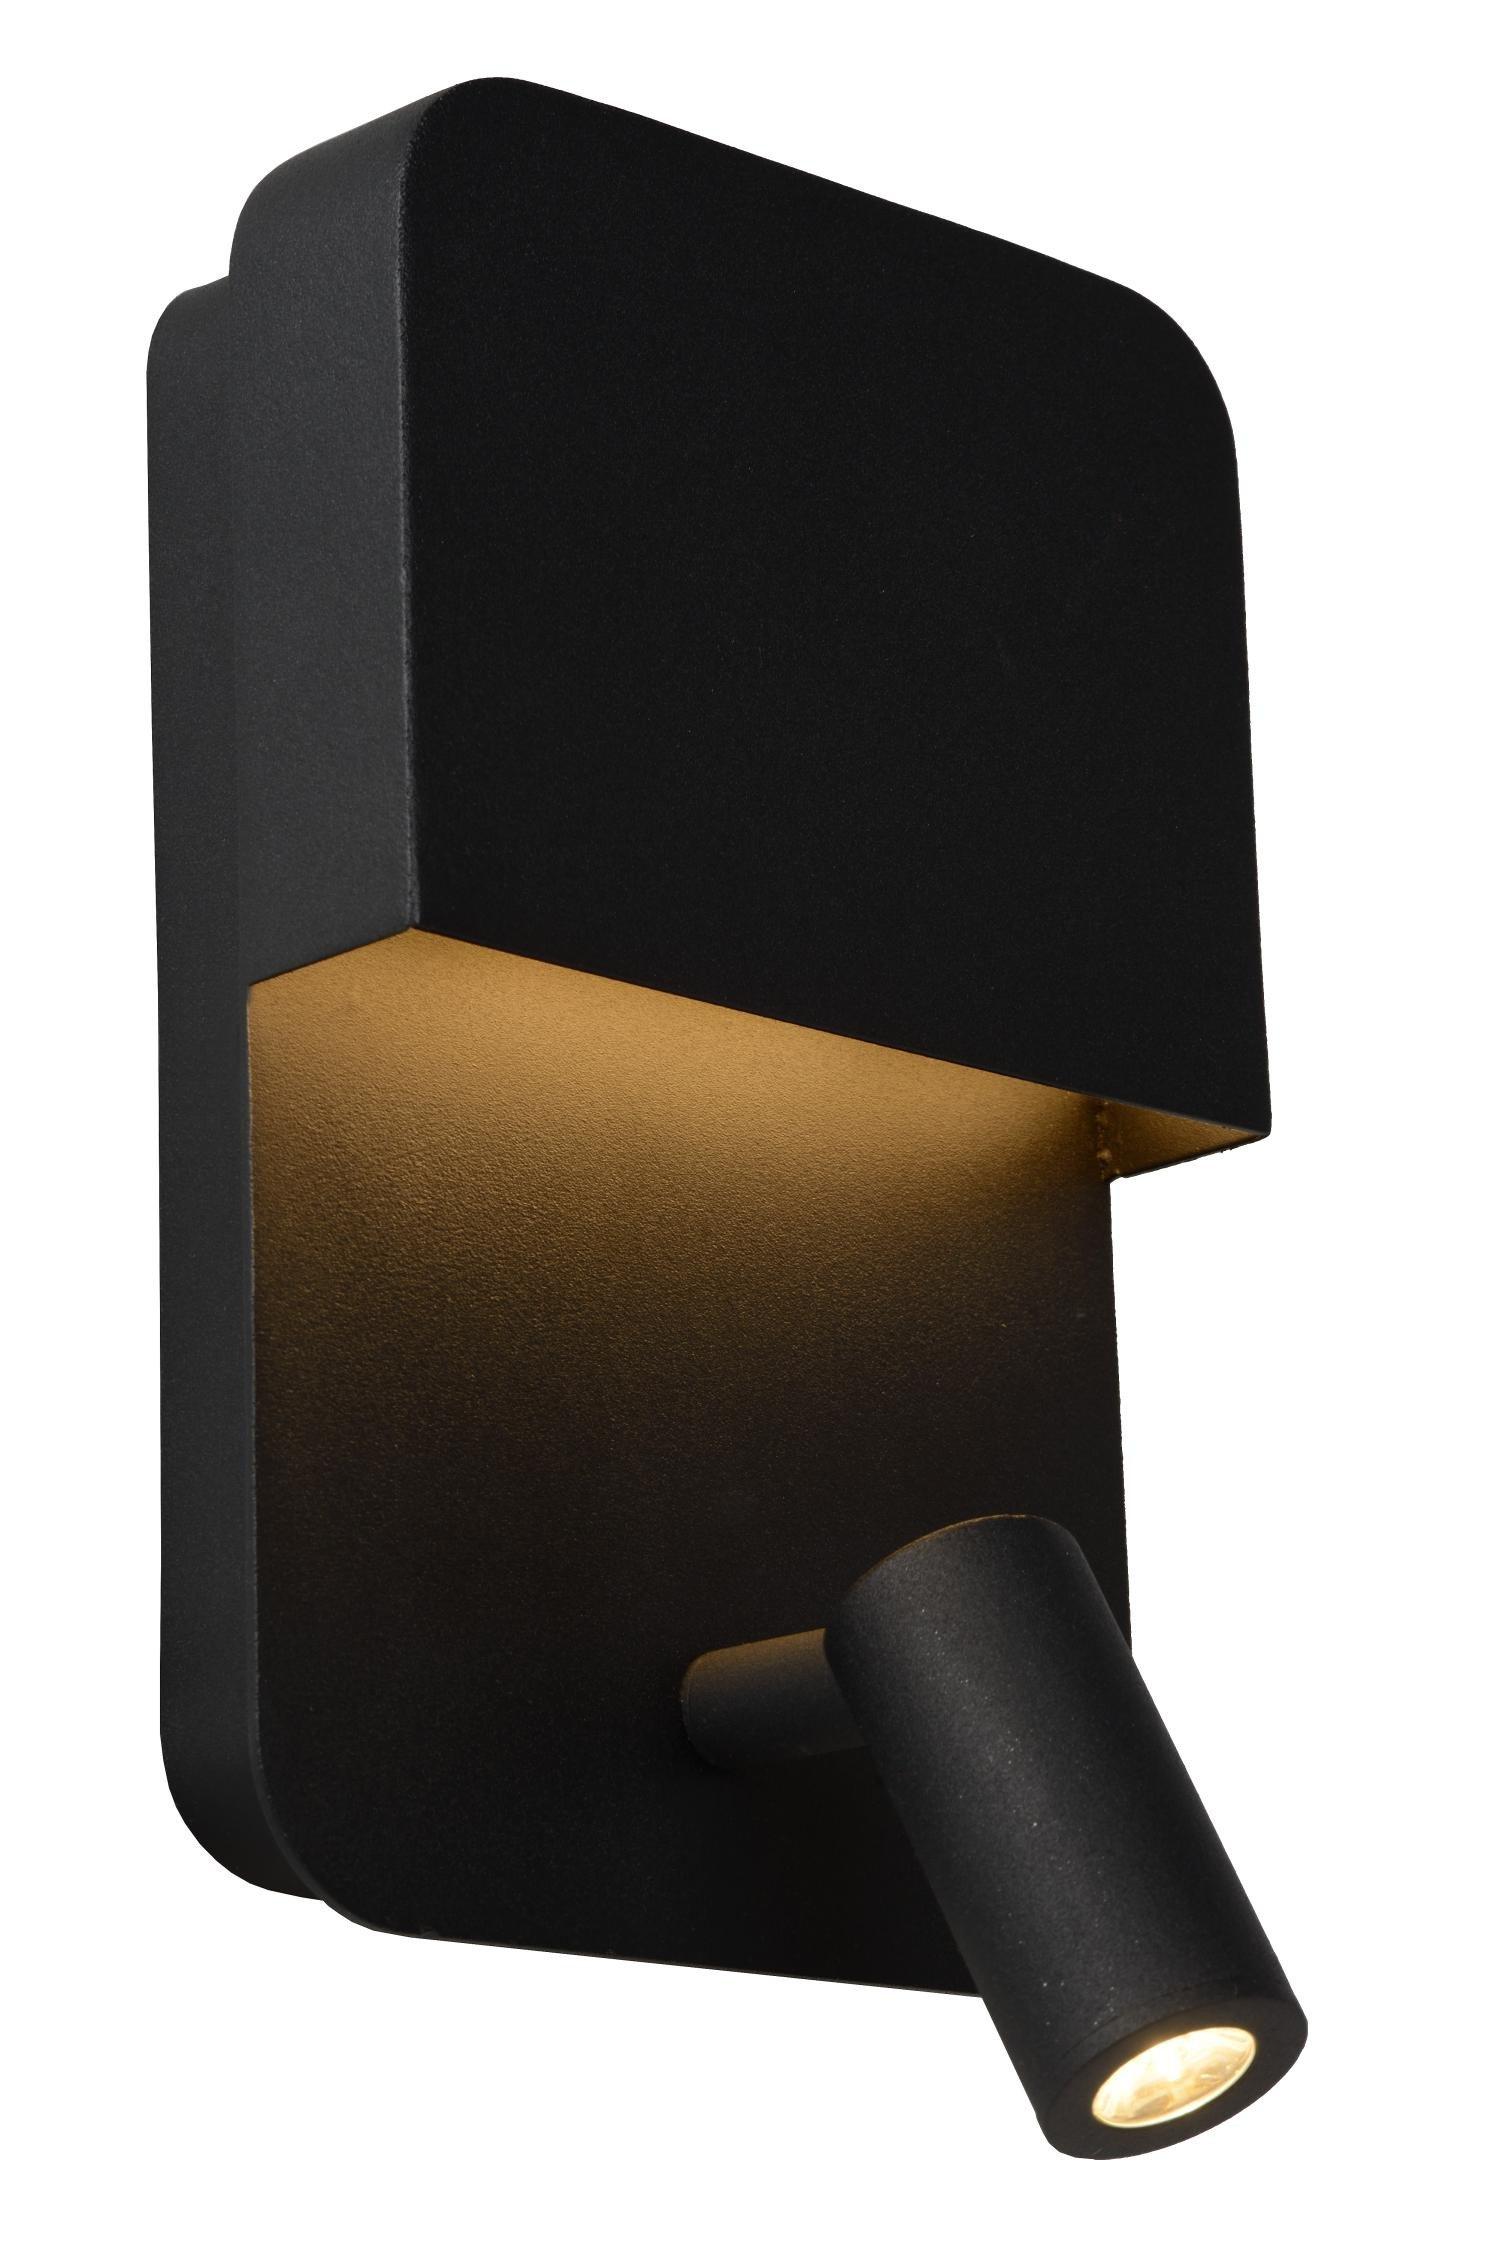 Lucide BOXER Tiltable Bedside Lamp 3000K LED Rotatable USB Charging Wall Light